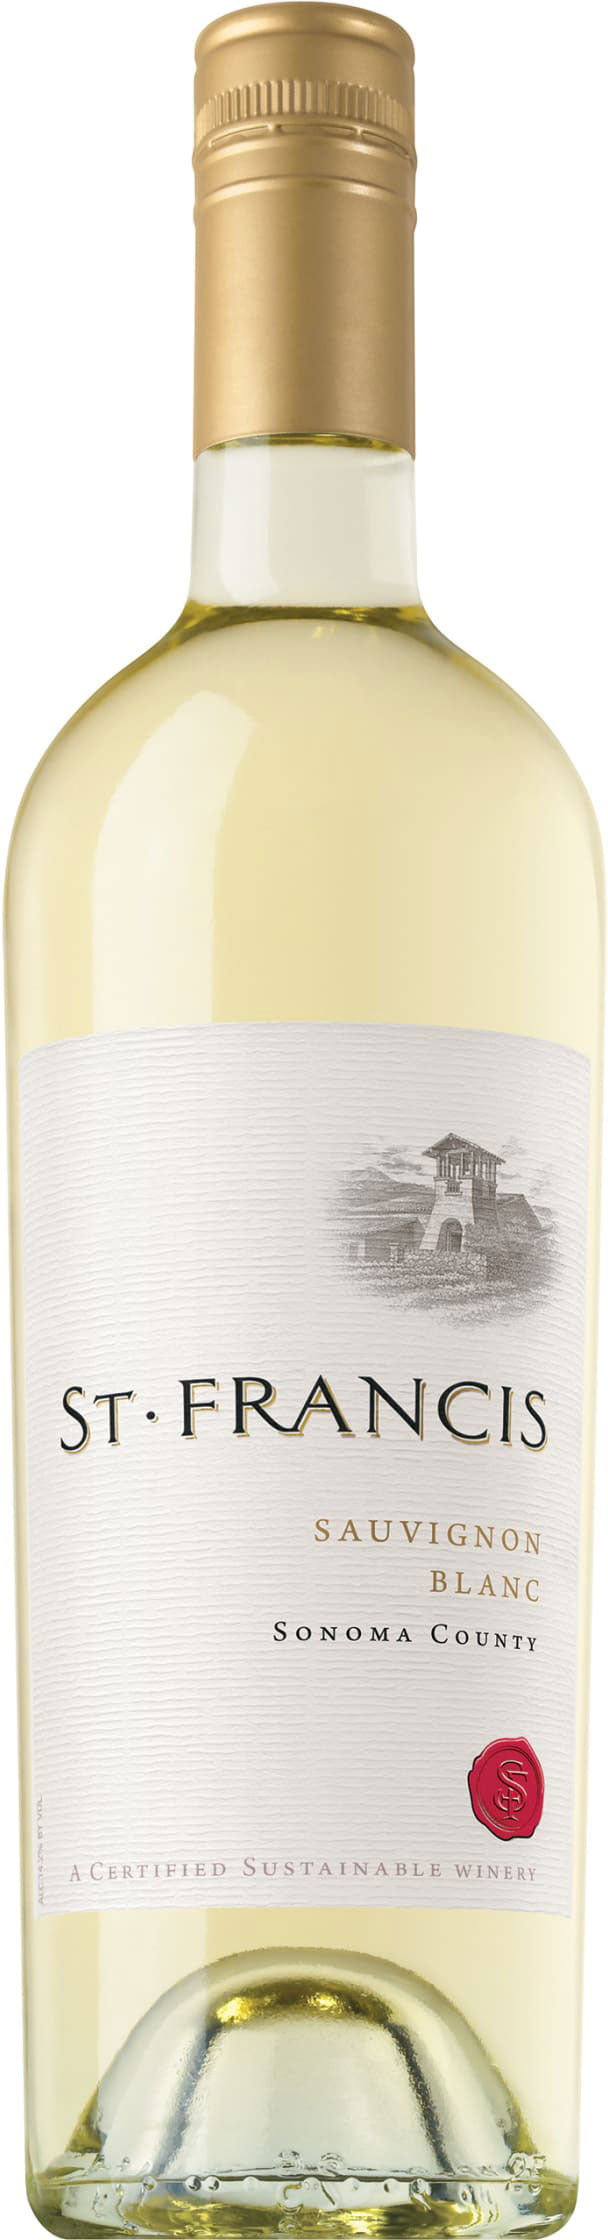 St. Francis Sauvignon Blanc